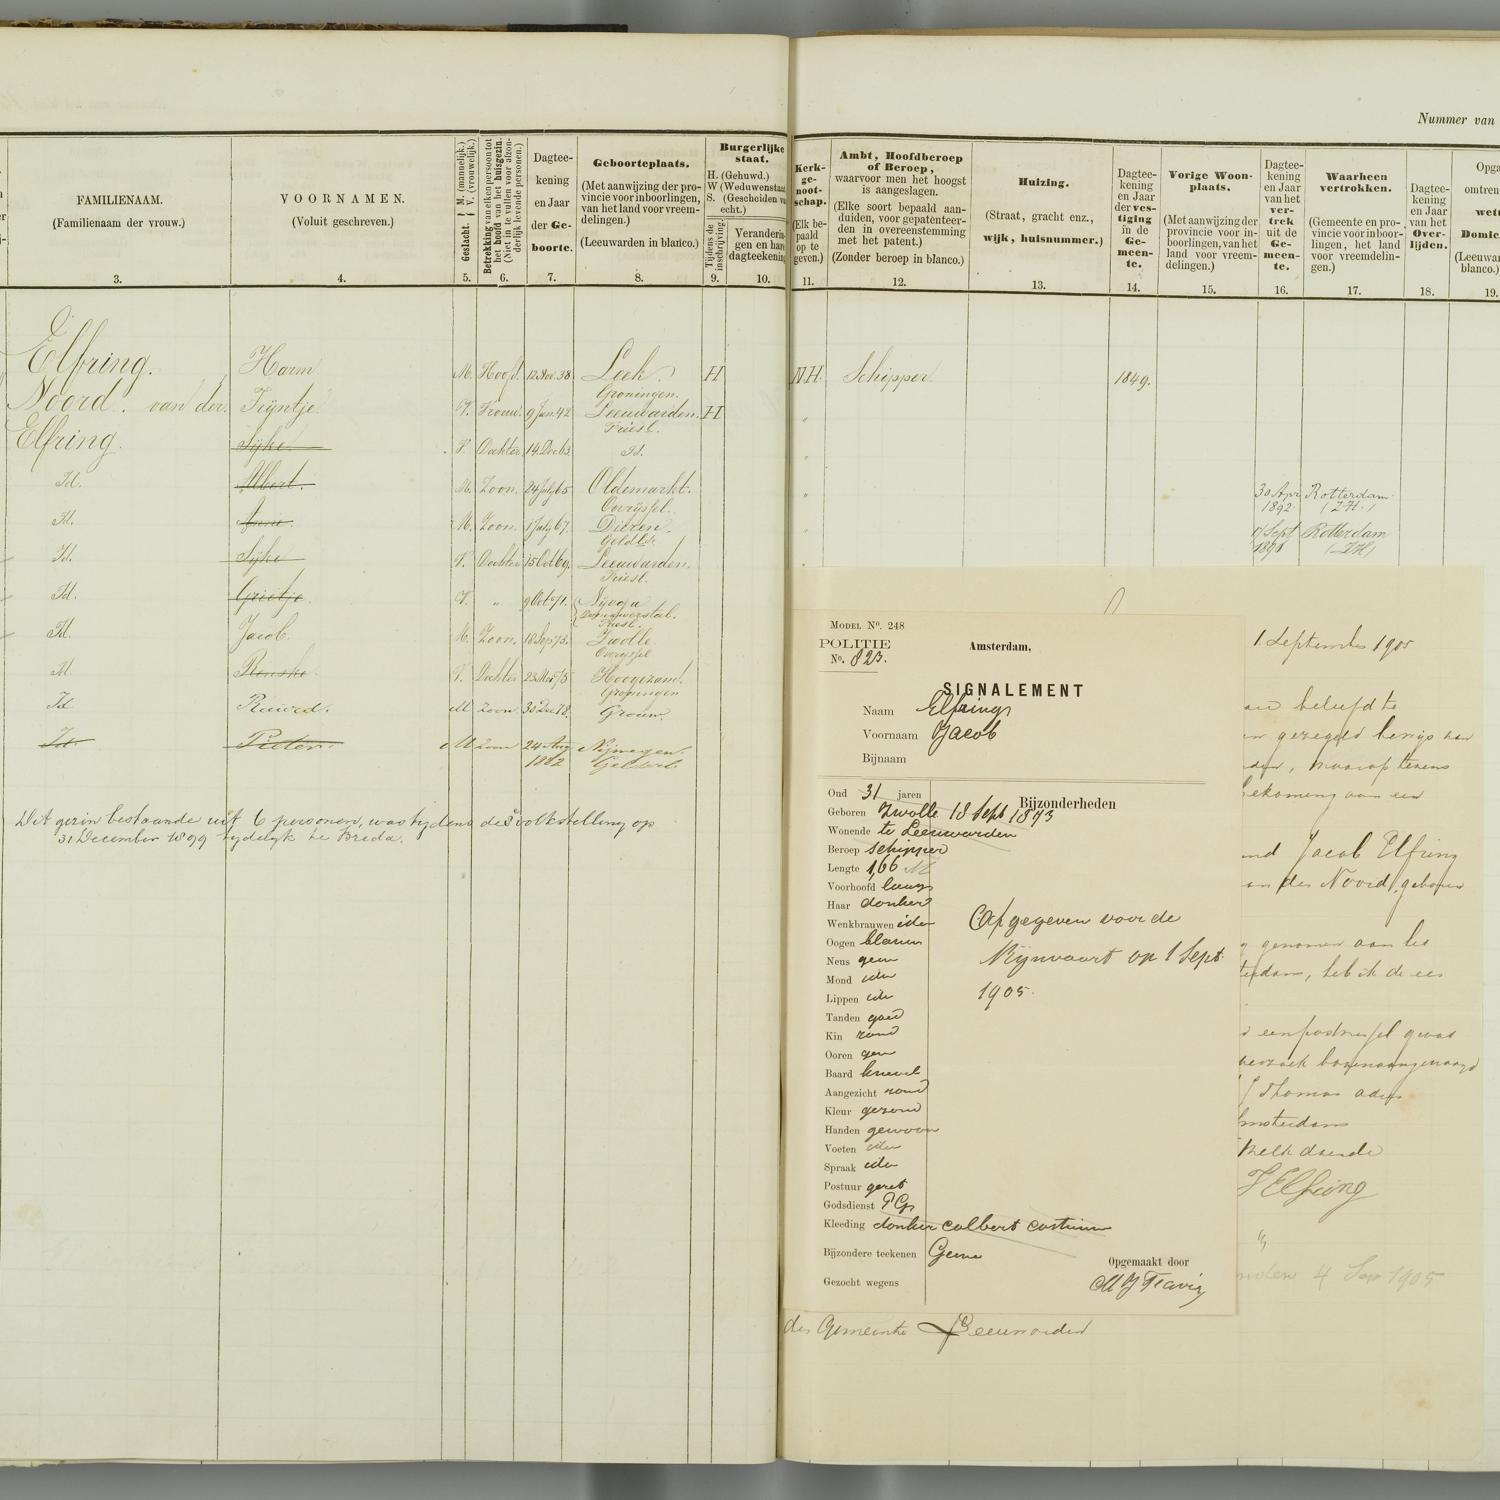 Civil registry, Leeuwarden, 1876-1904, sheet 180 (left, with police profile of Jacob Elfring)